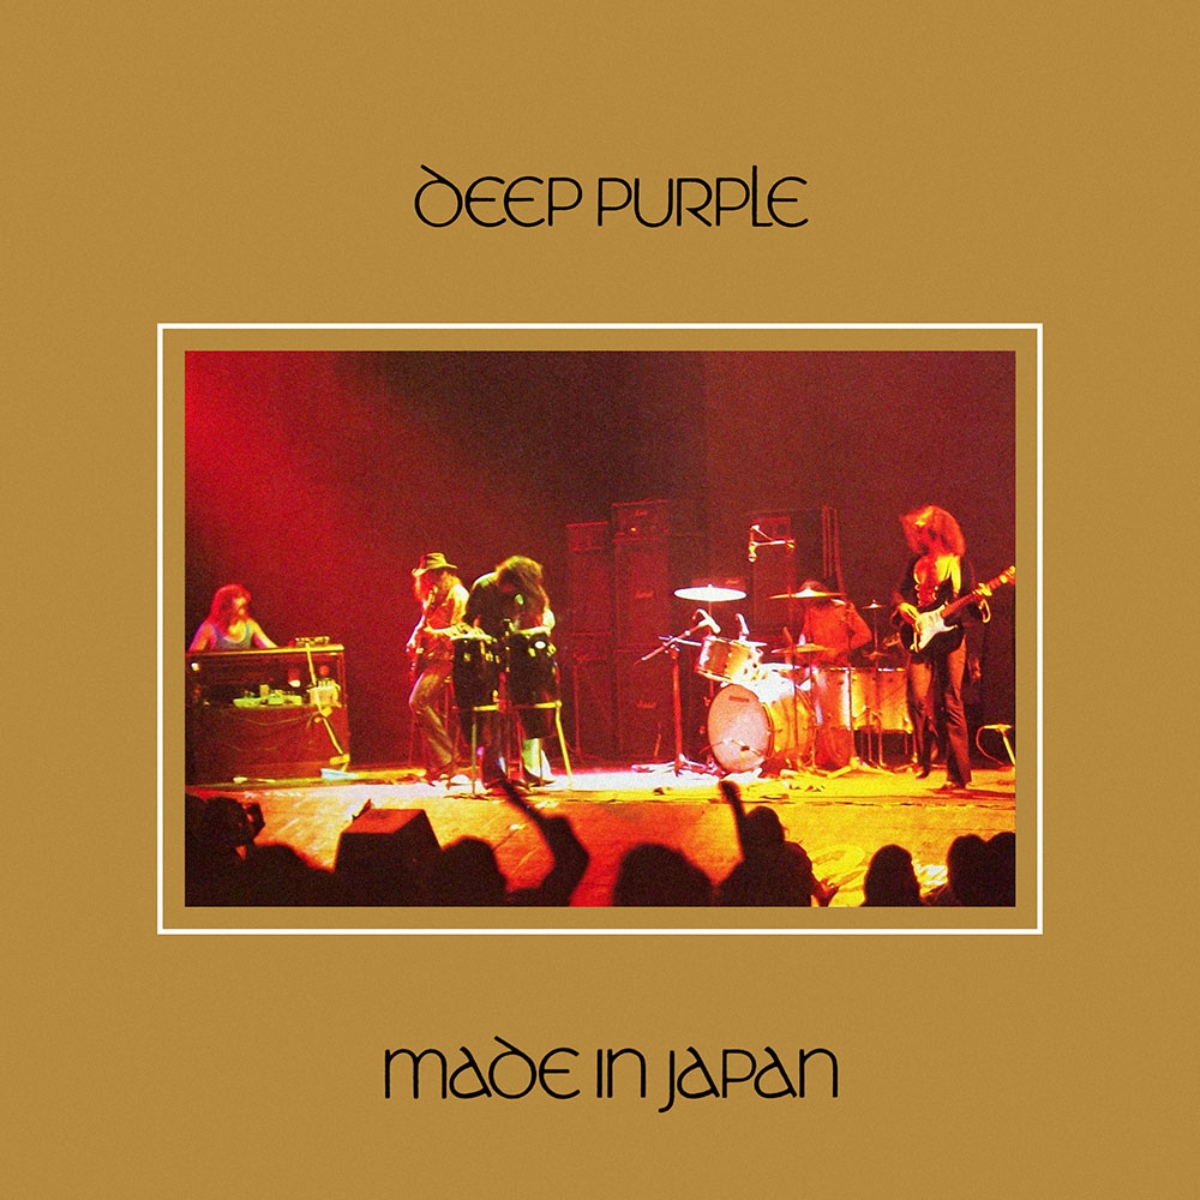 Deep Purple - "Made in Japan" (album cover)